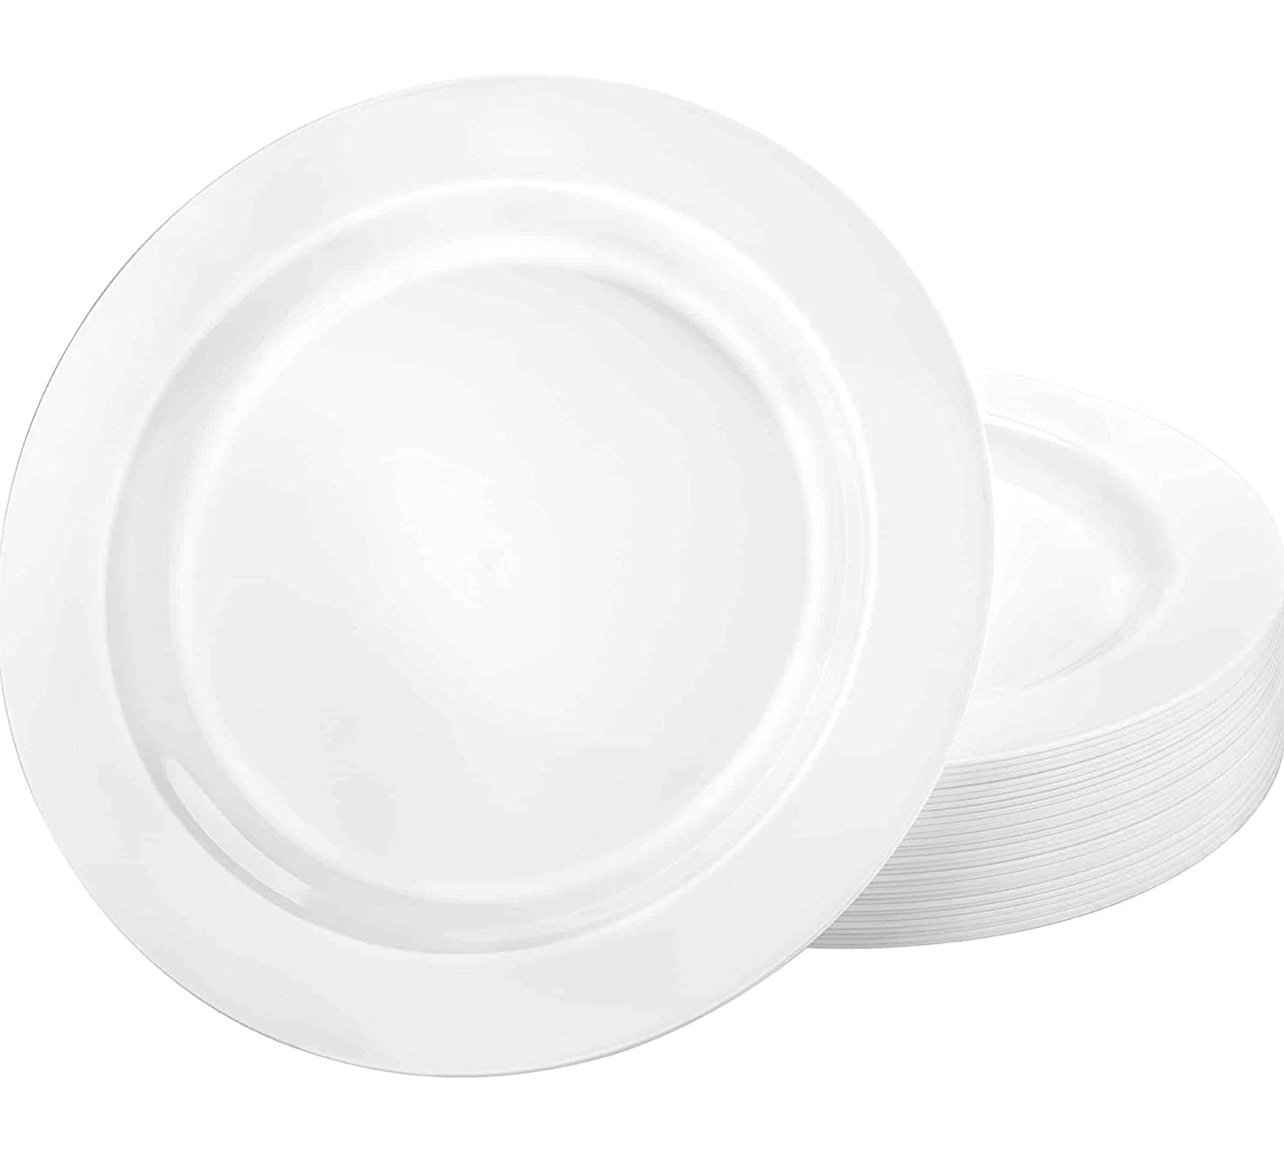 White dish (Copy)